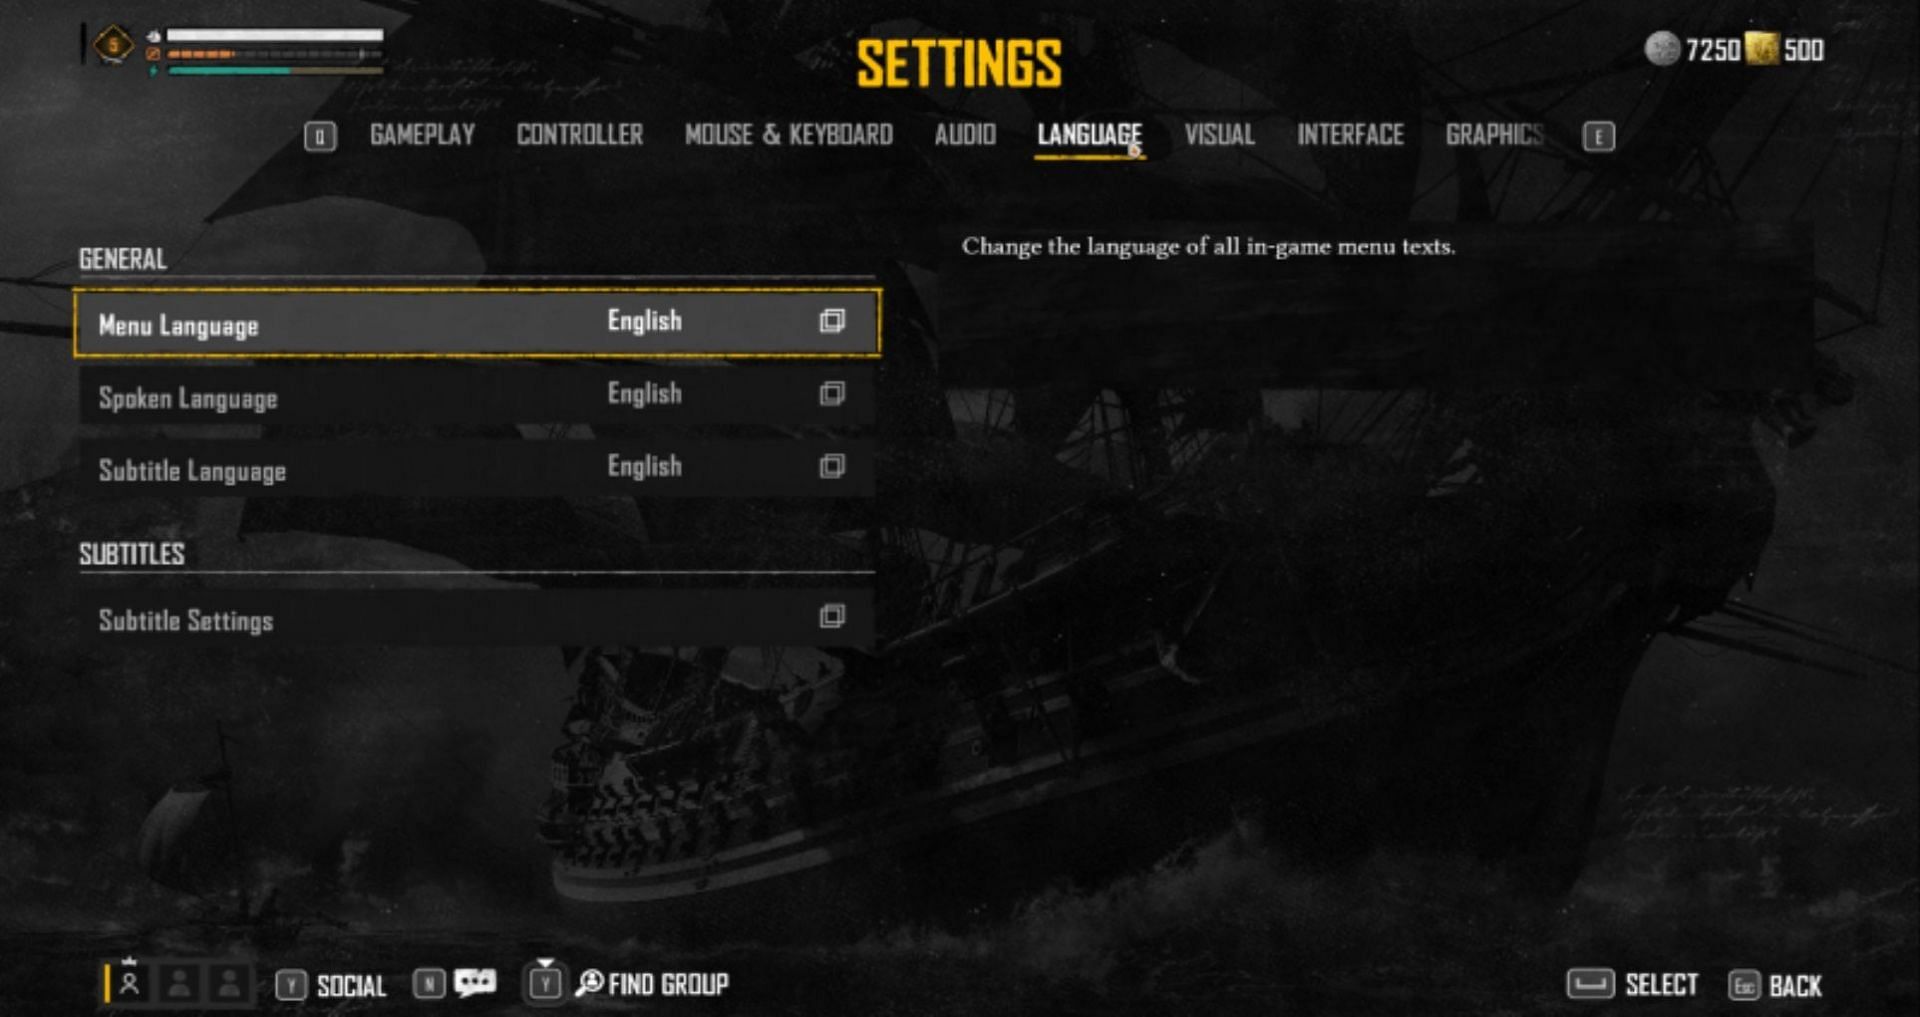 Subtitles menu in Skull and Bones (Image via Ubisoft)